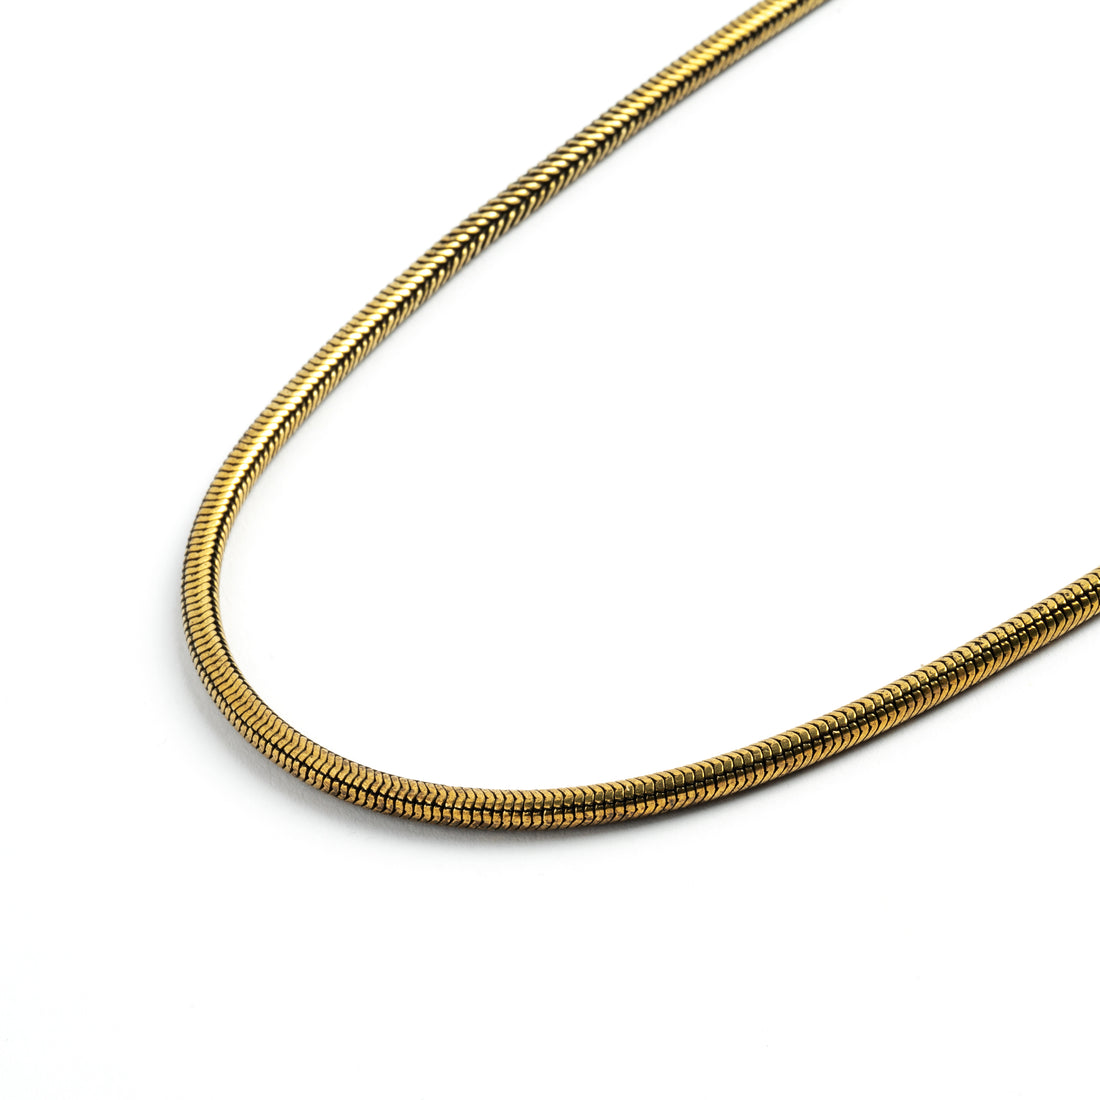 Brass Snake Necklace close up view